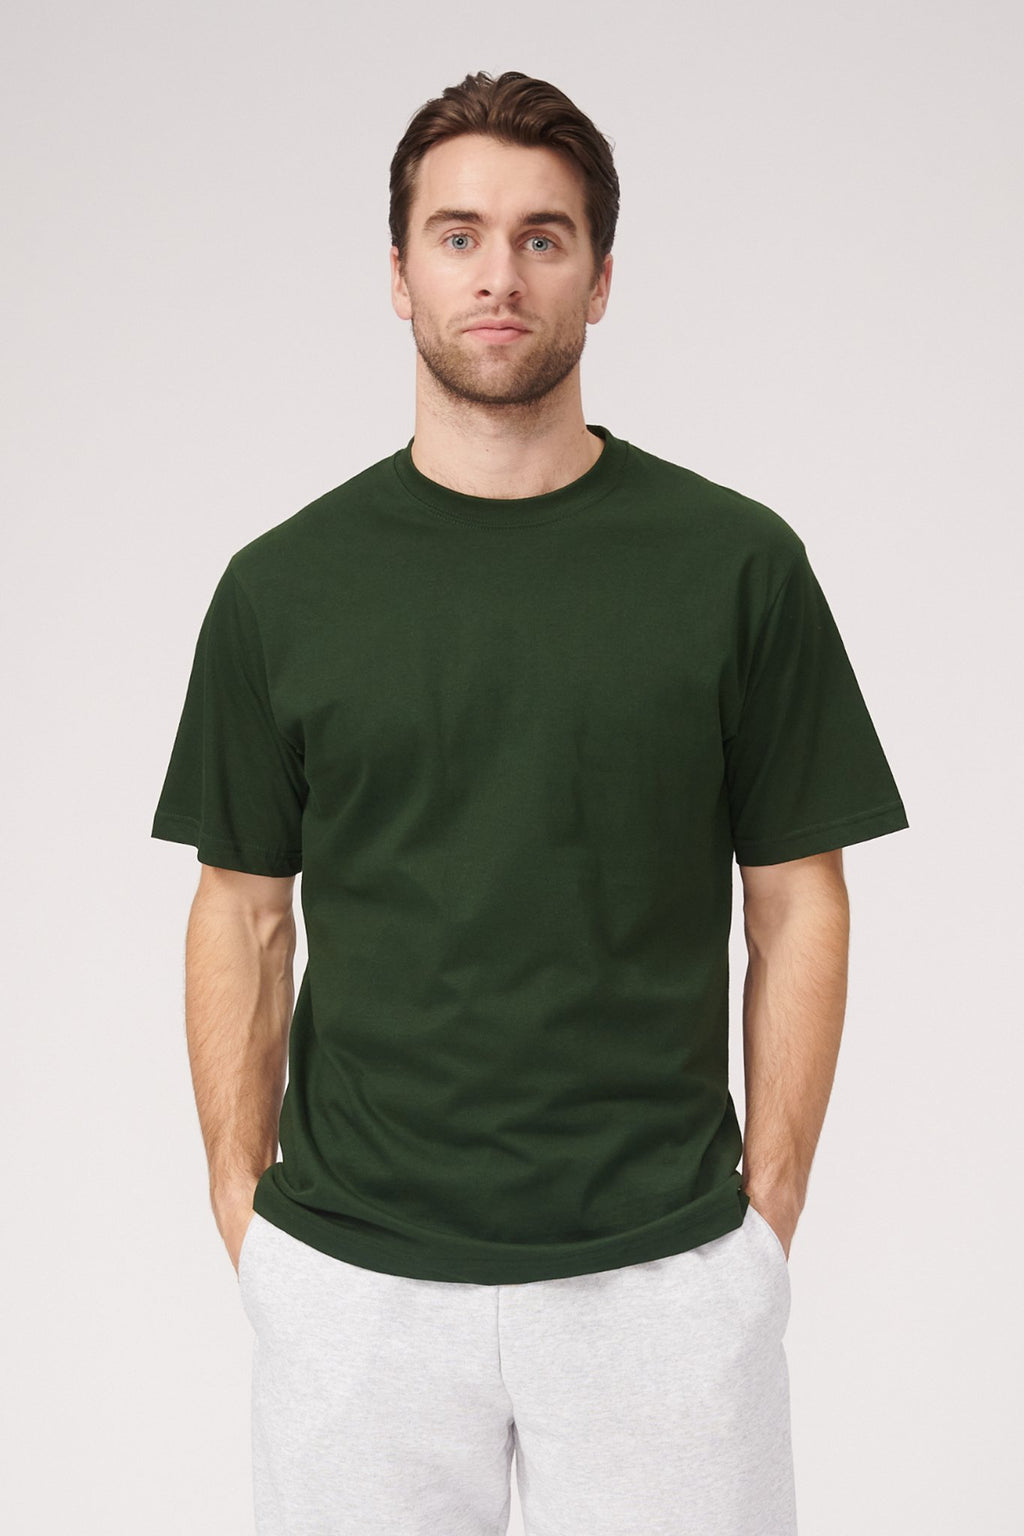 Camisetas de gran tamaño: paquete (6 pcs).